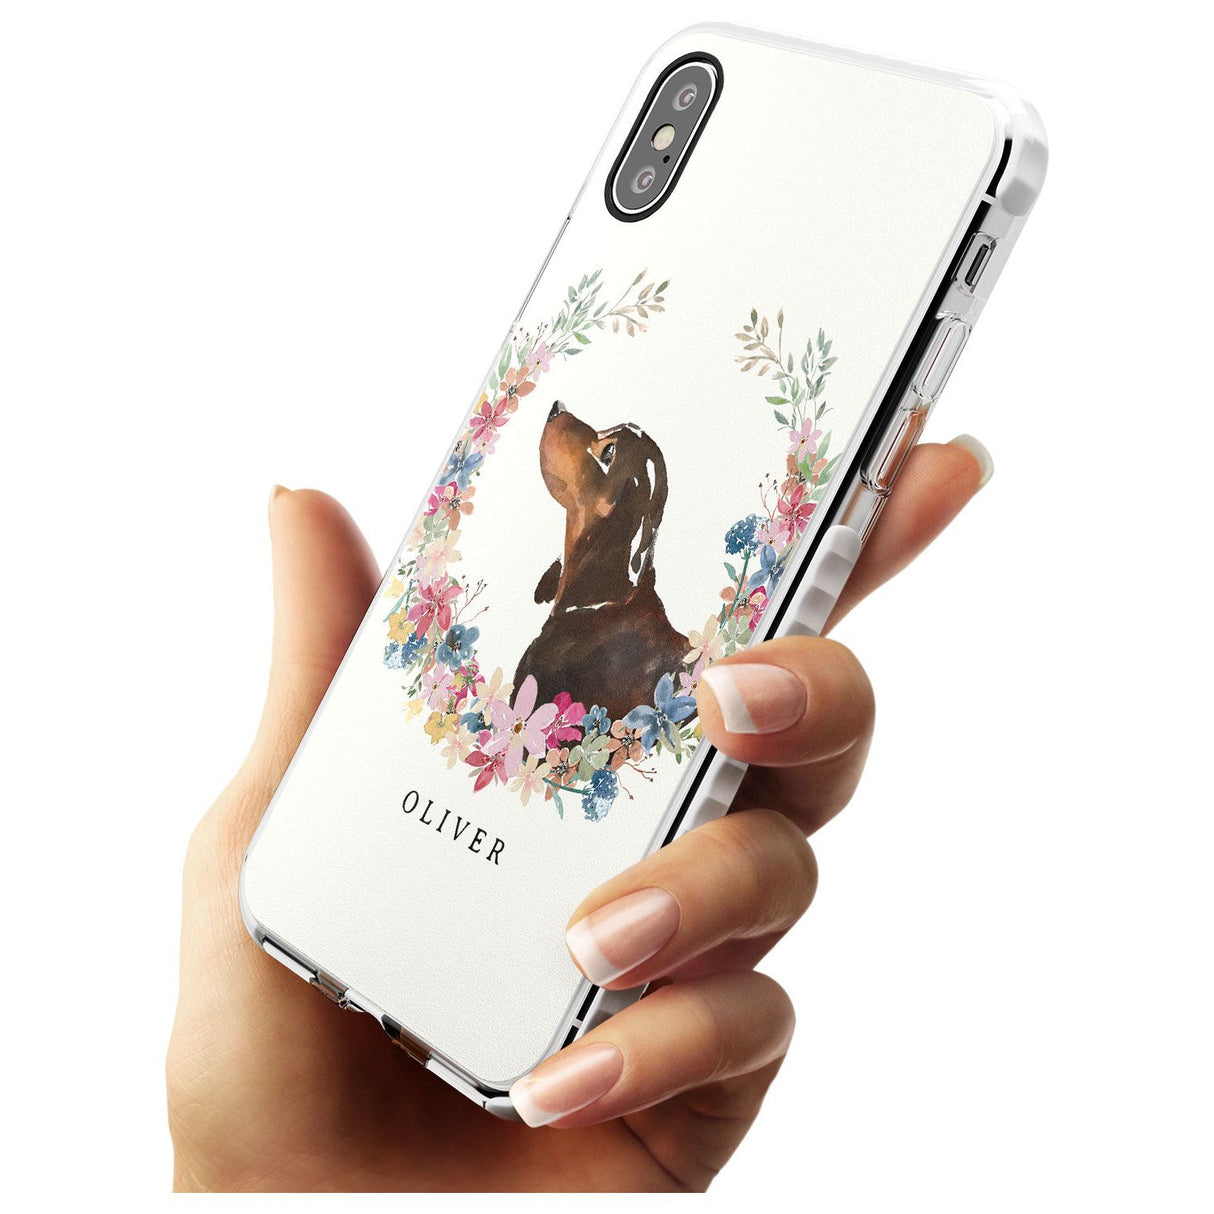 Black & Tan Dachshund - Watercolour Dog Portrait Impact Phone Case for iPhone X XS Max XR